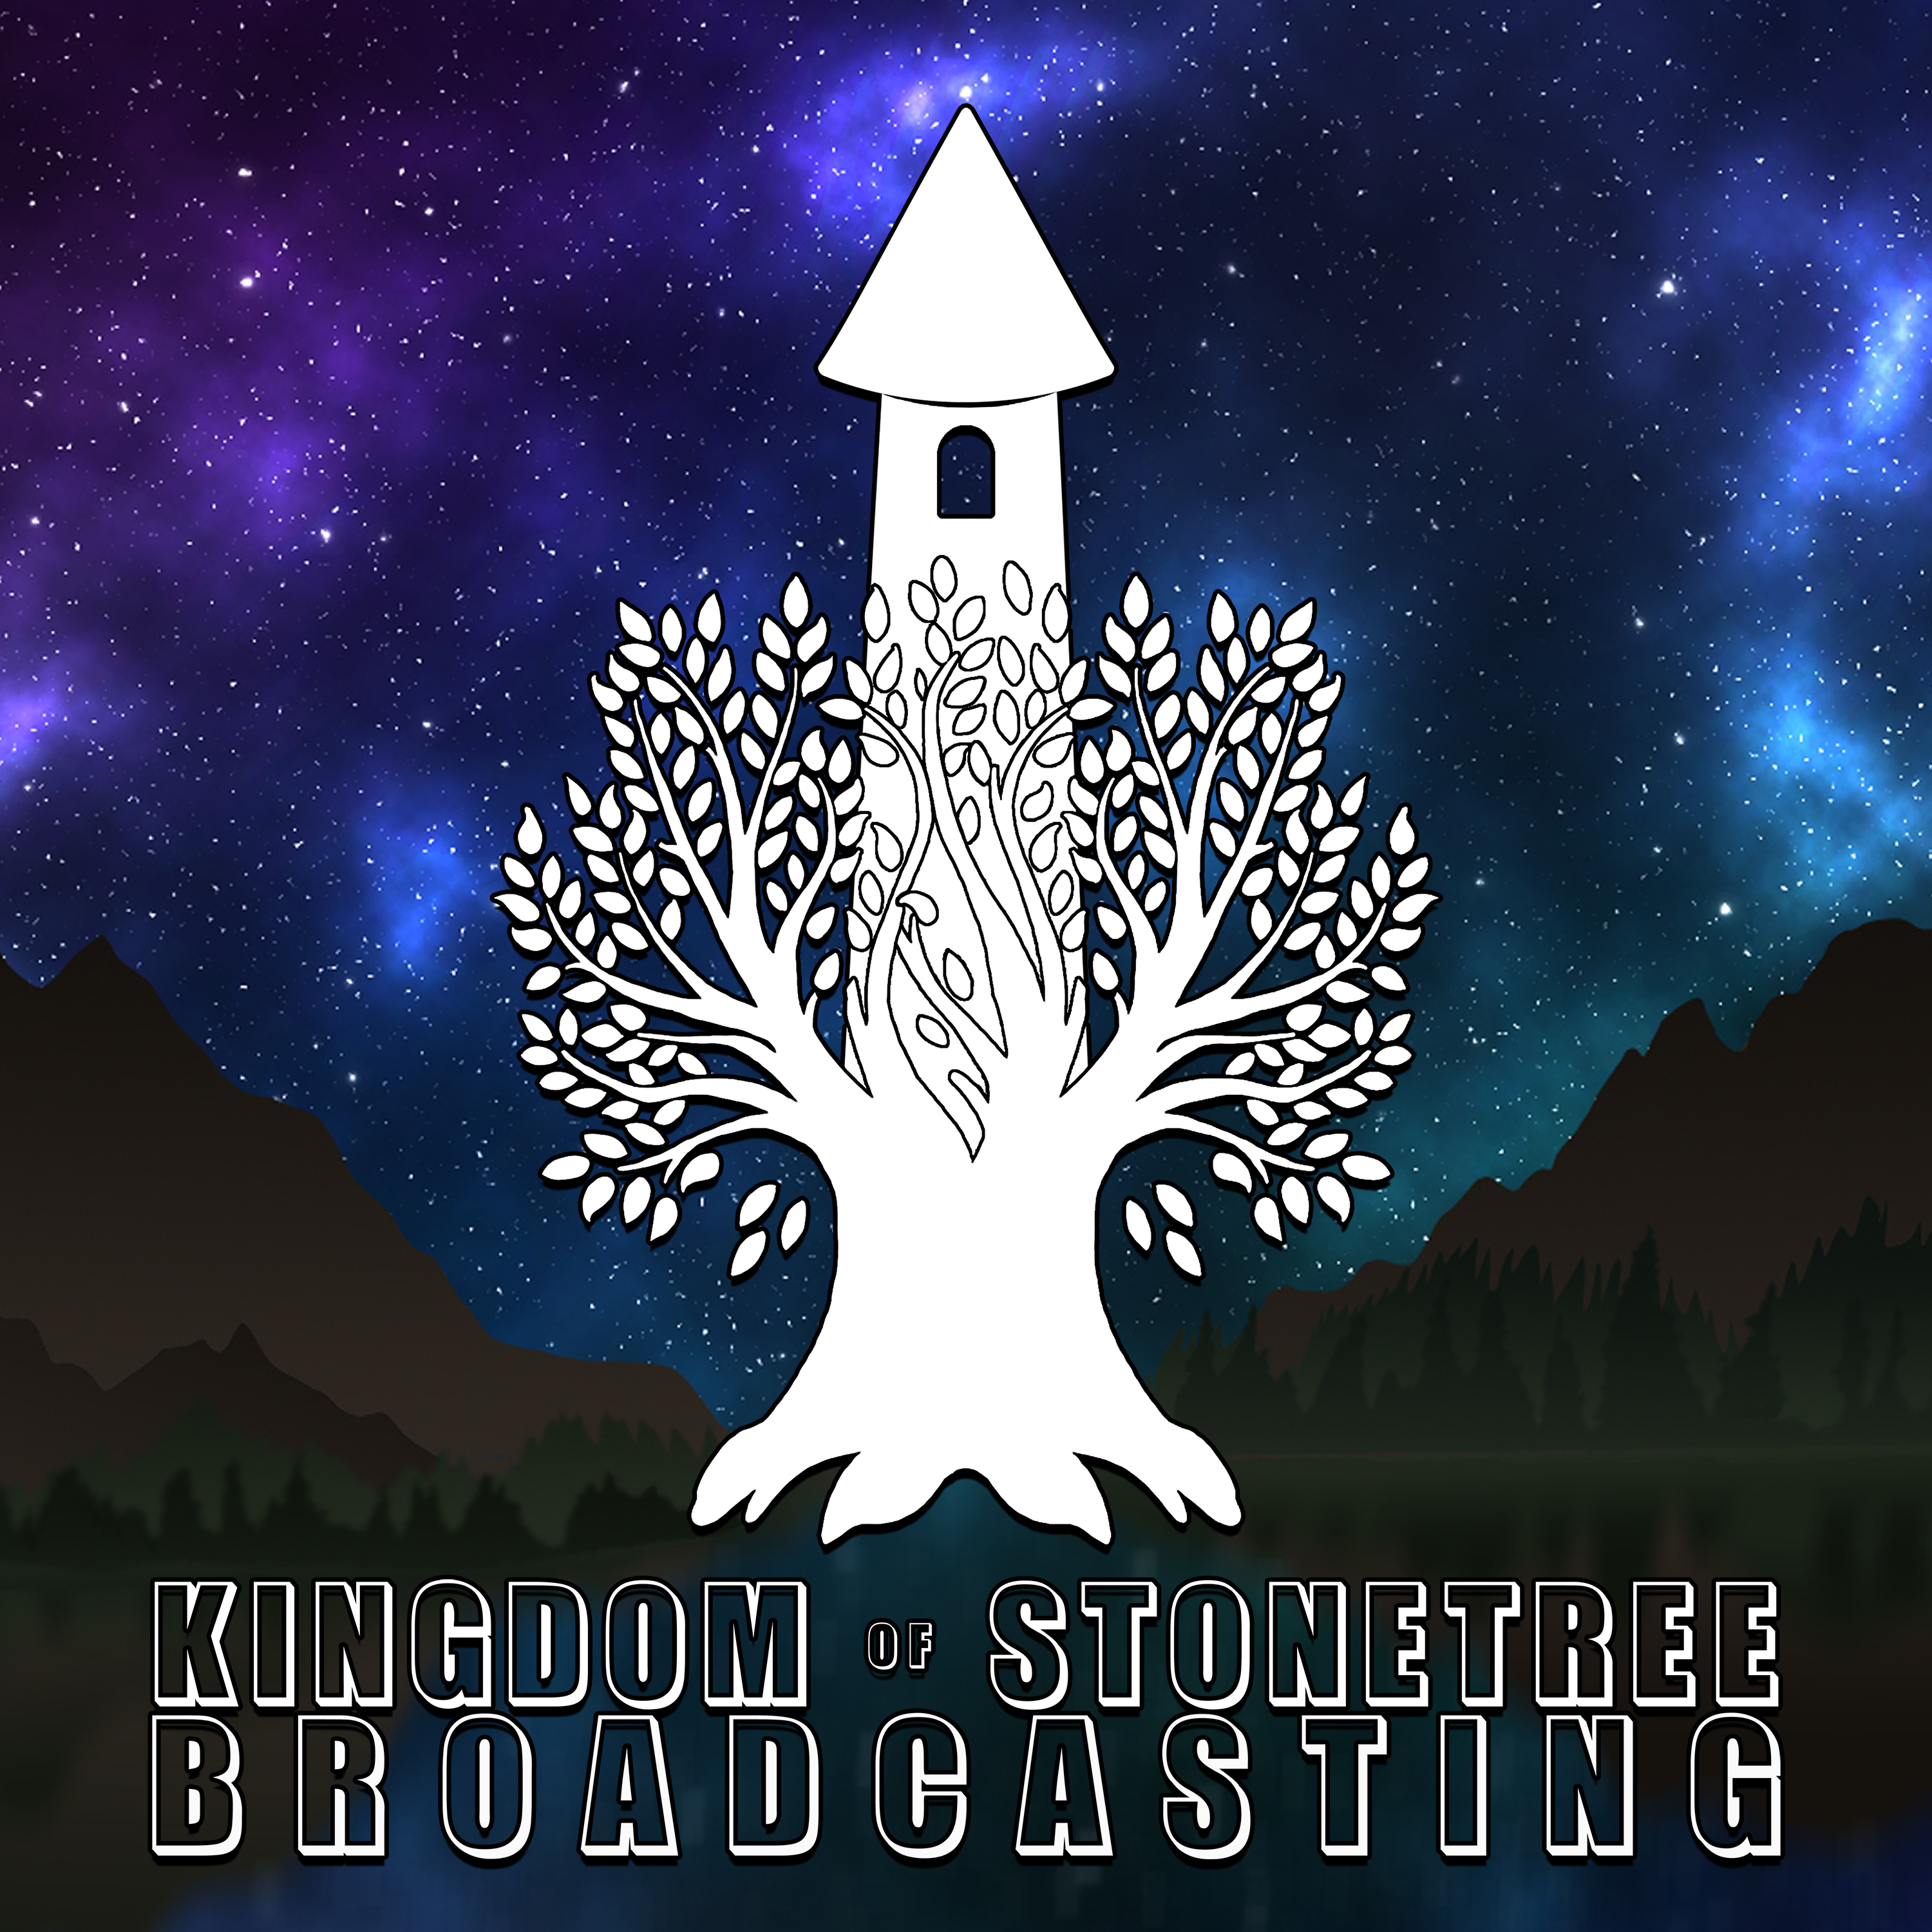 Kingdom of Stonetree Broadcasting Ads 2